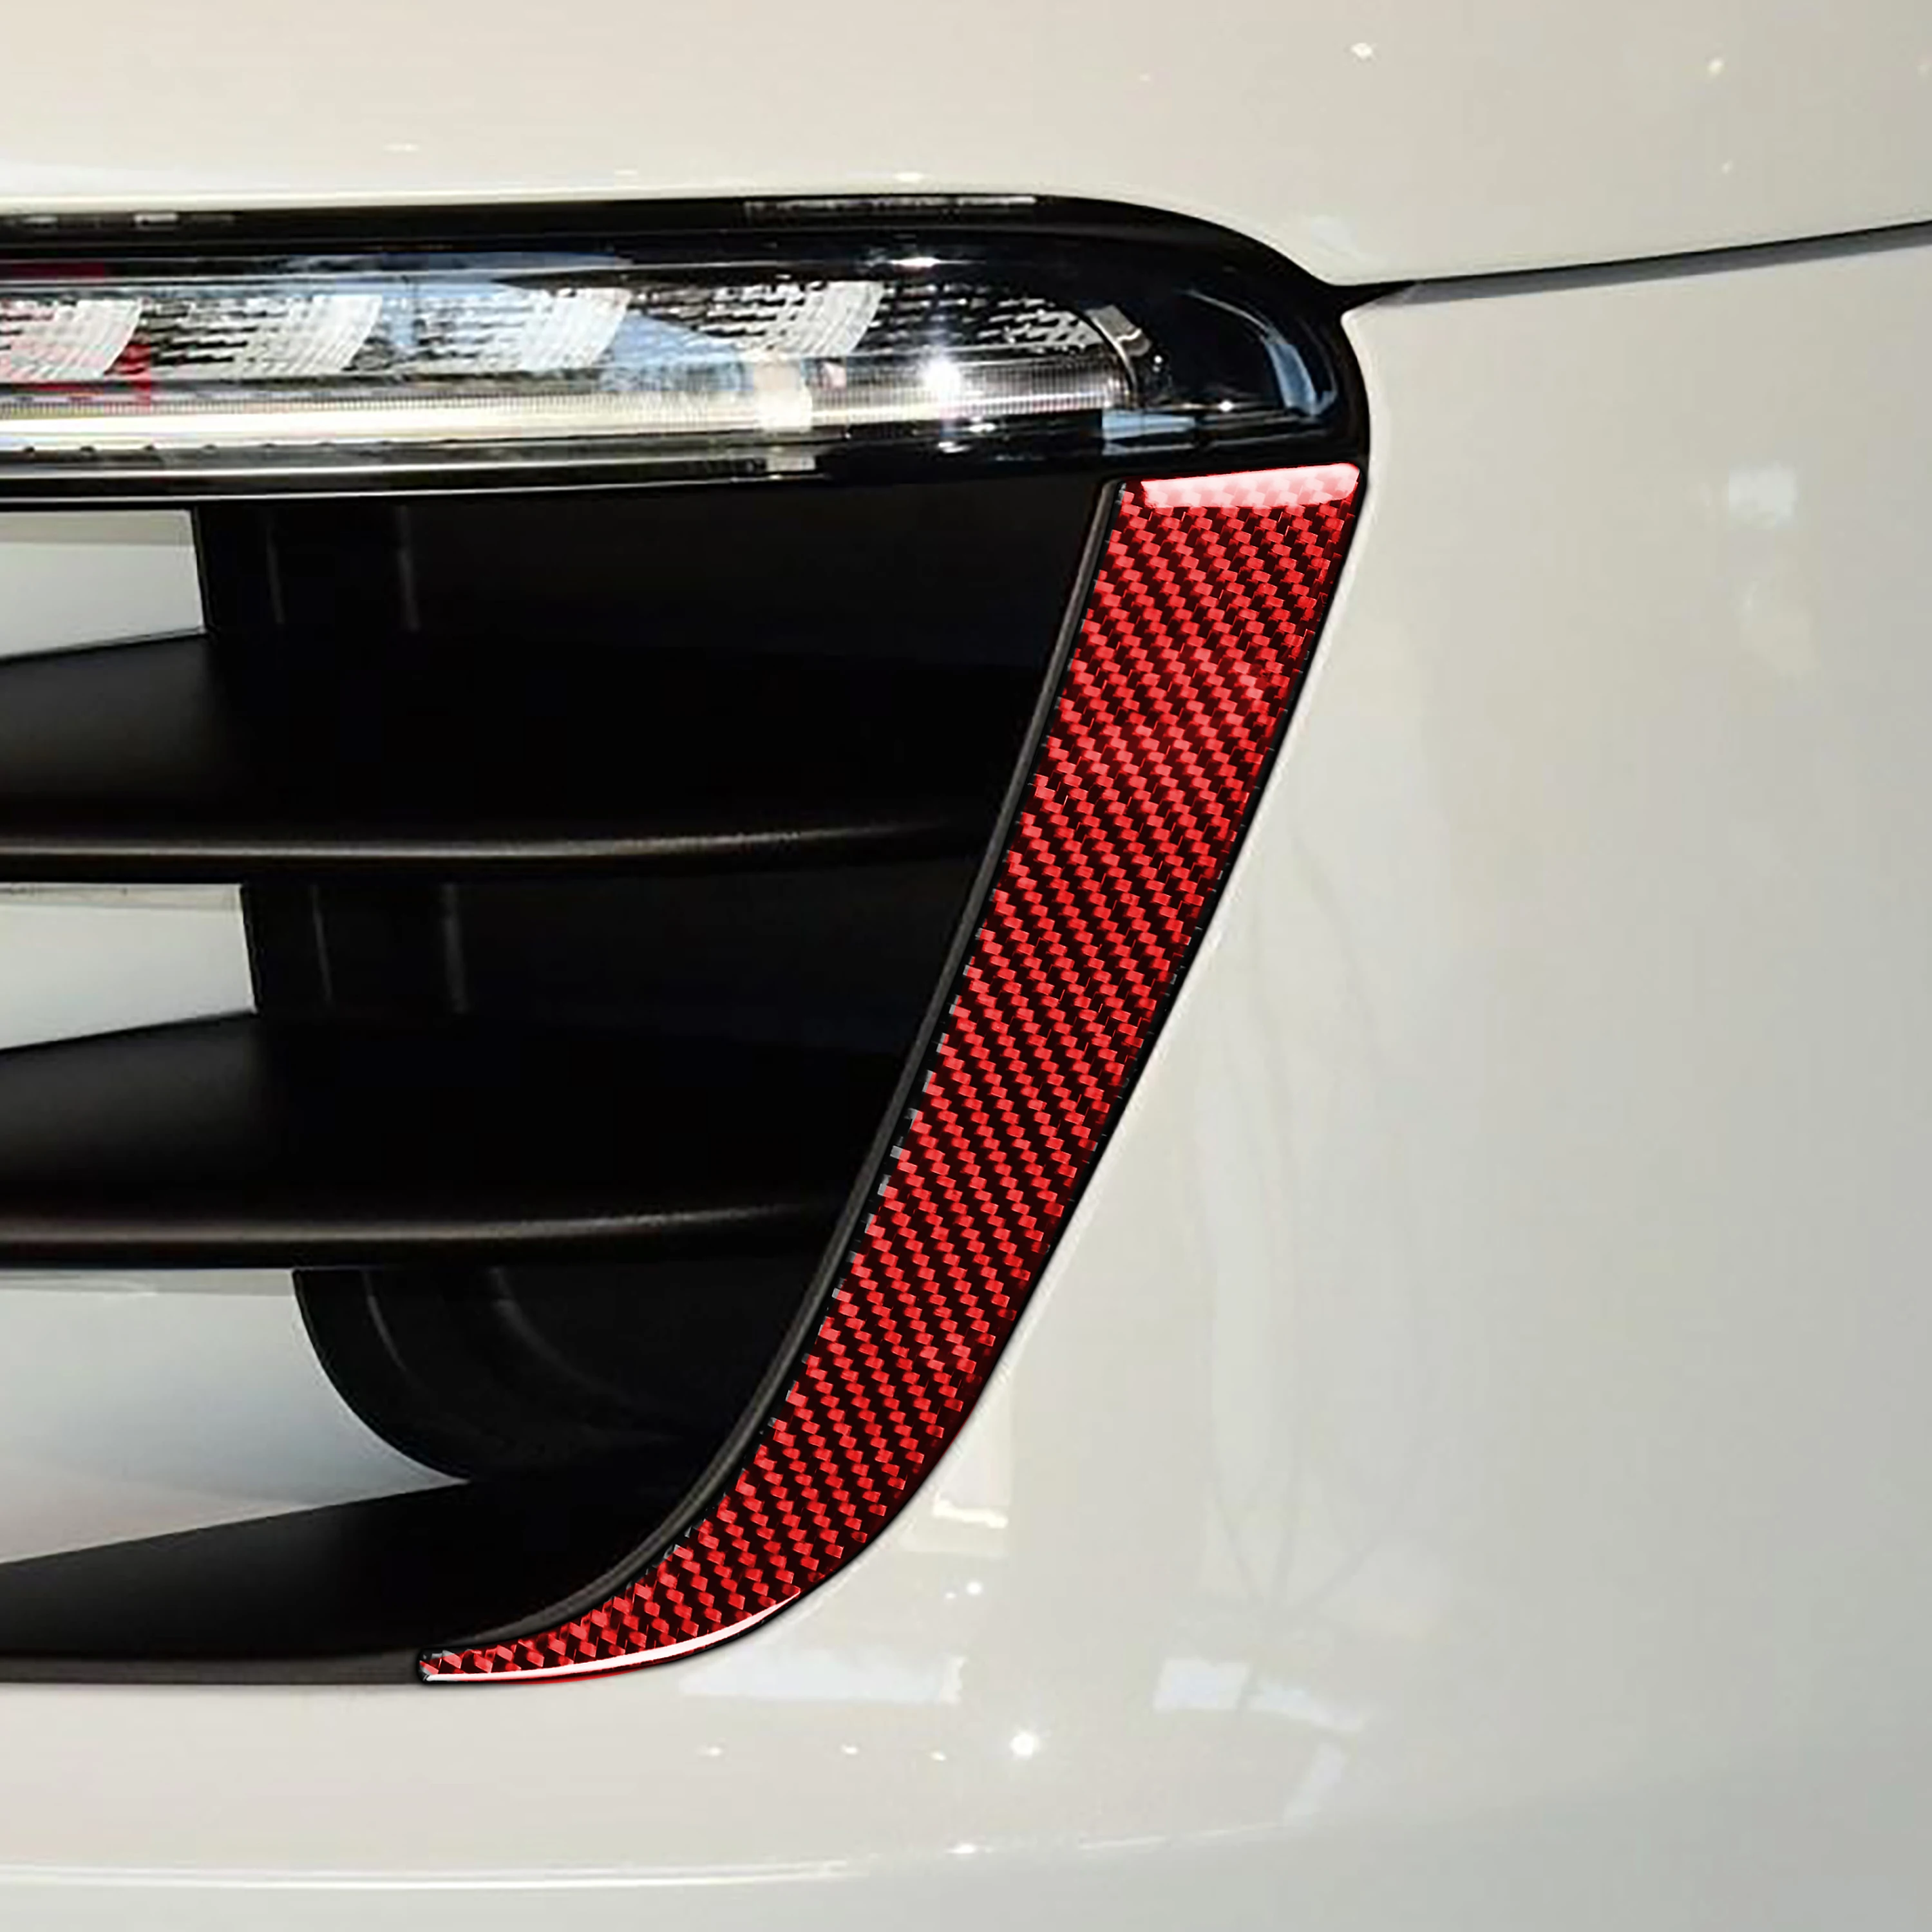 

2Pcs Red Genuine Carbon Fiber For Porsche MACAN 2014-2018 Car Daytime running light Cover Trim Styling Sticker